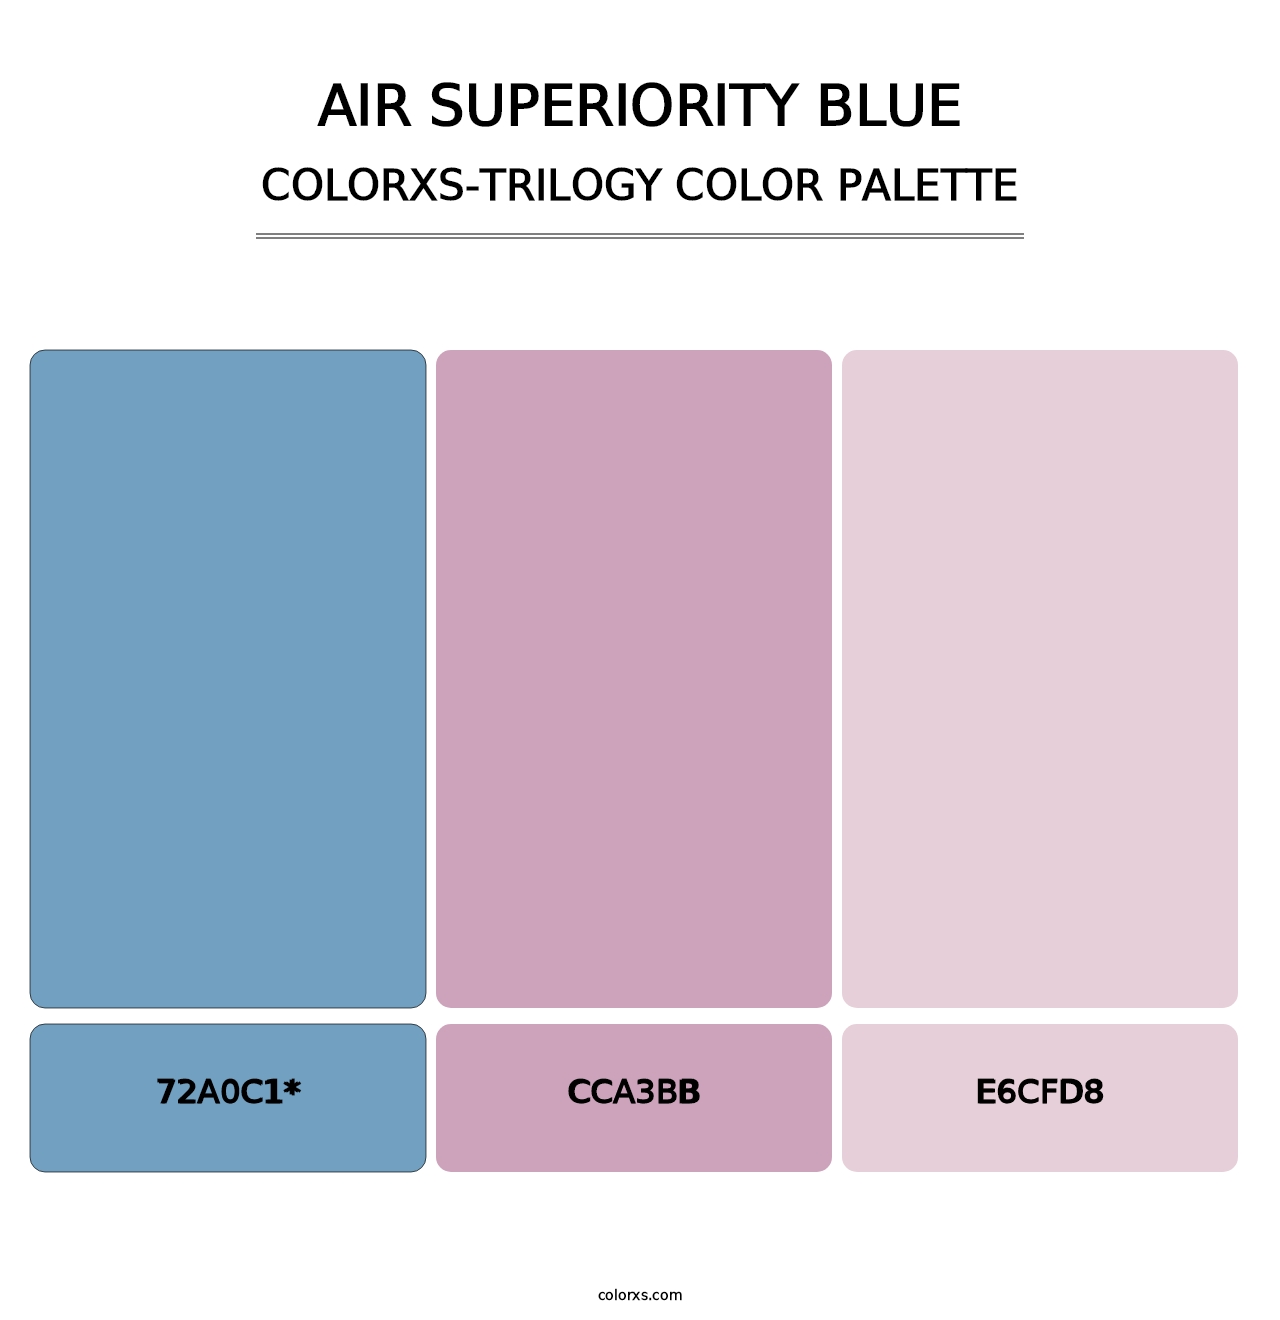 Air Superiority Blue - Colorxs Trilogy Palette